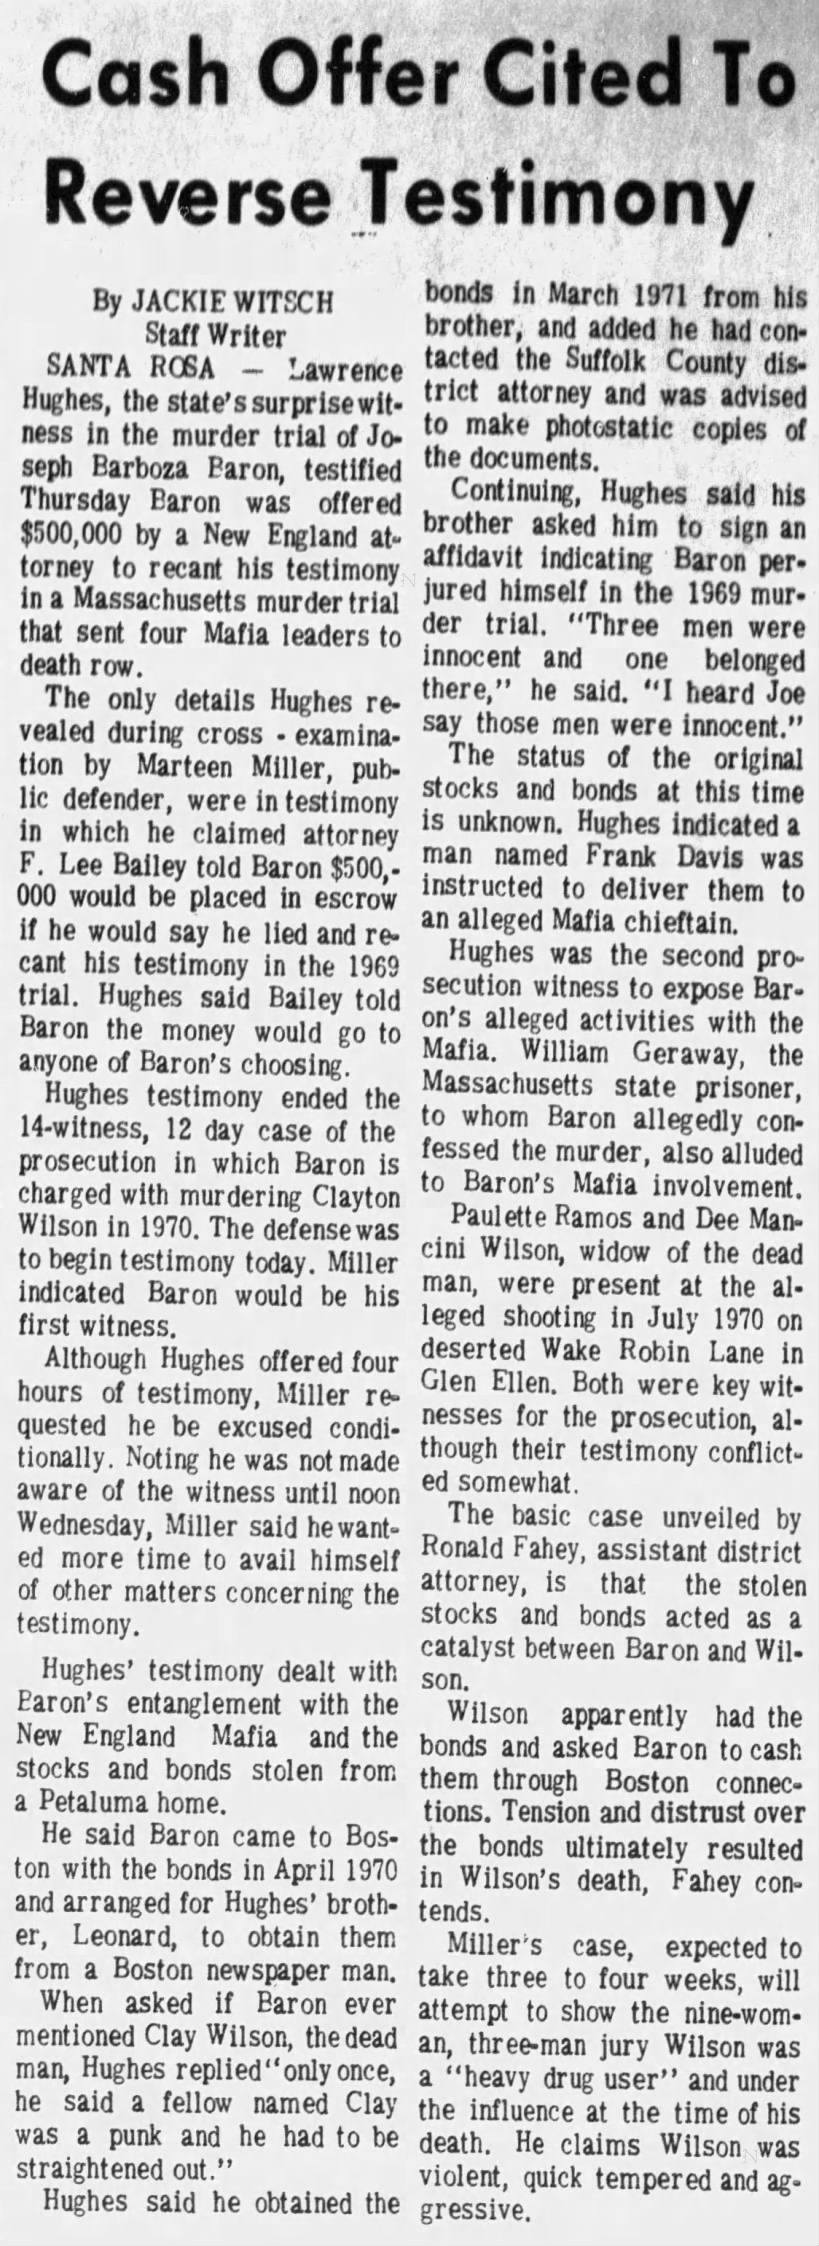 Hughes testimony (3 Dec 1971)